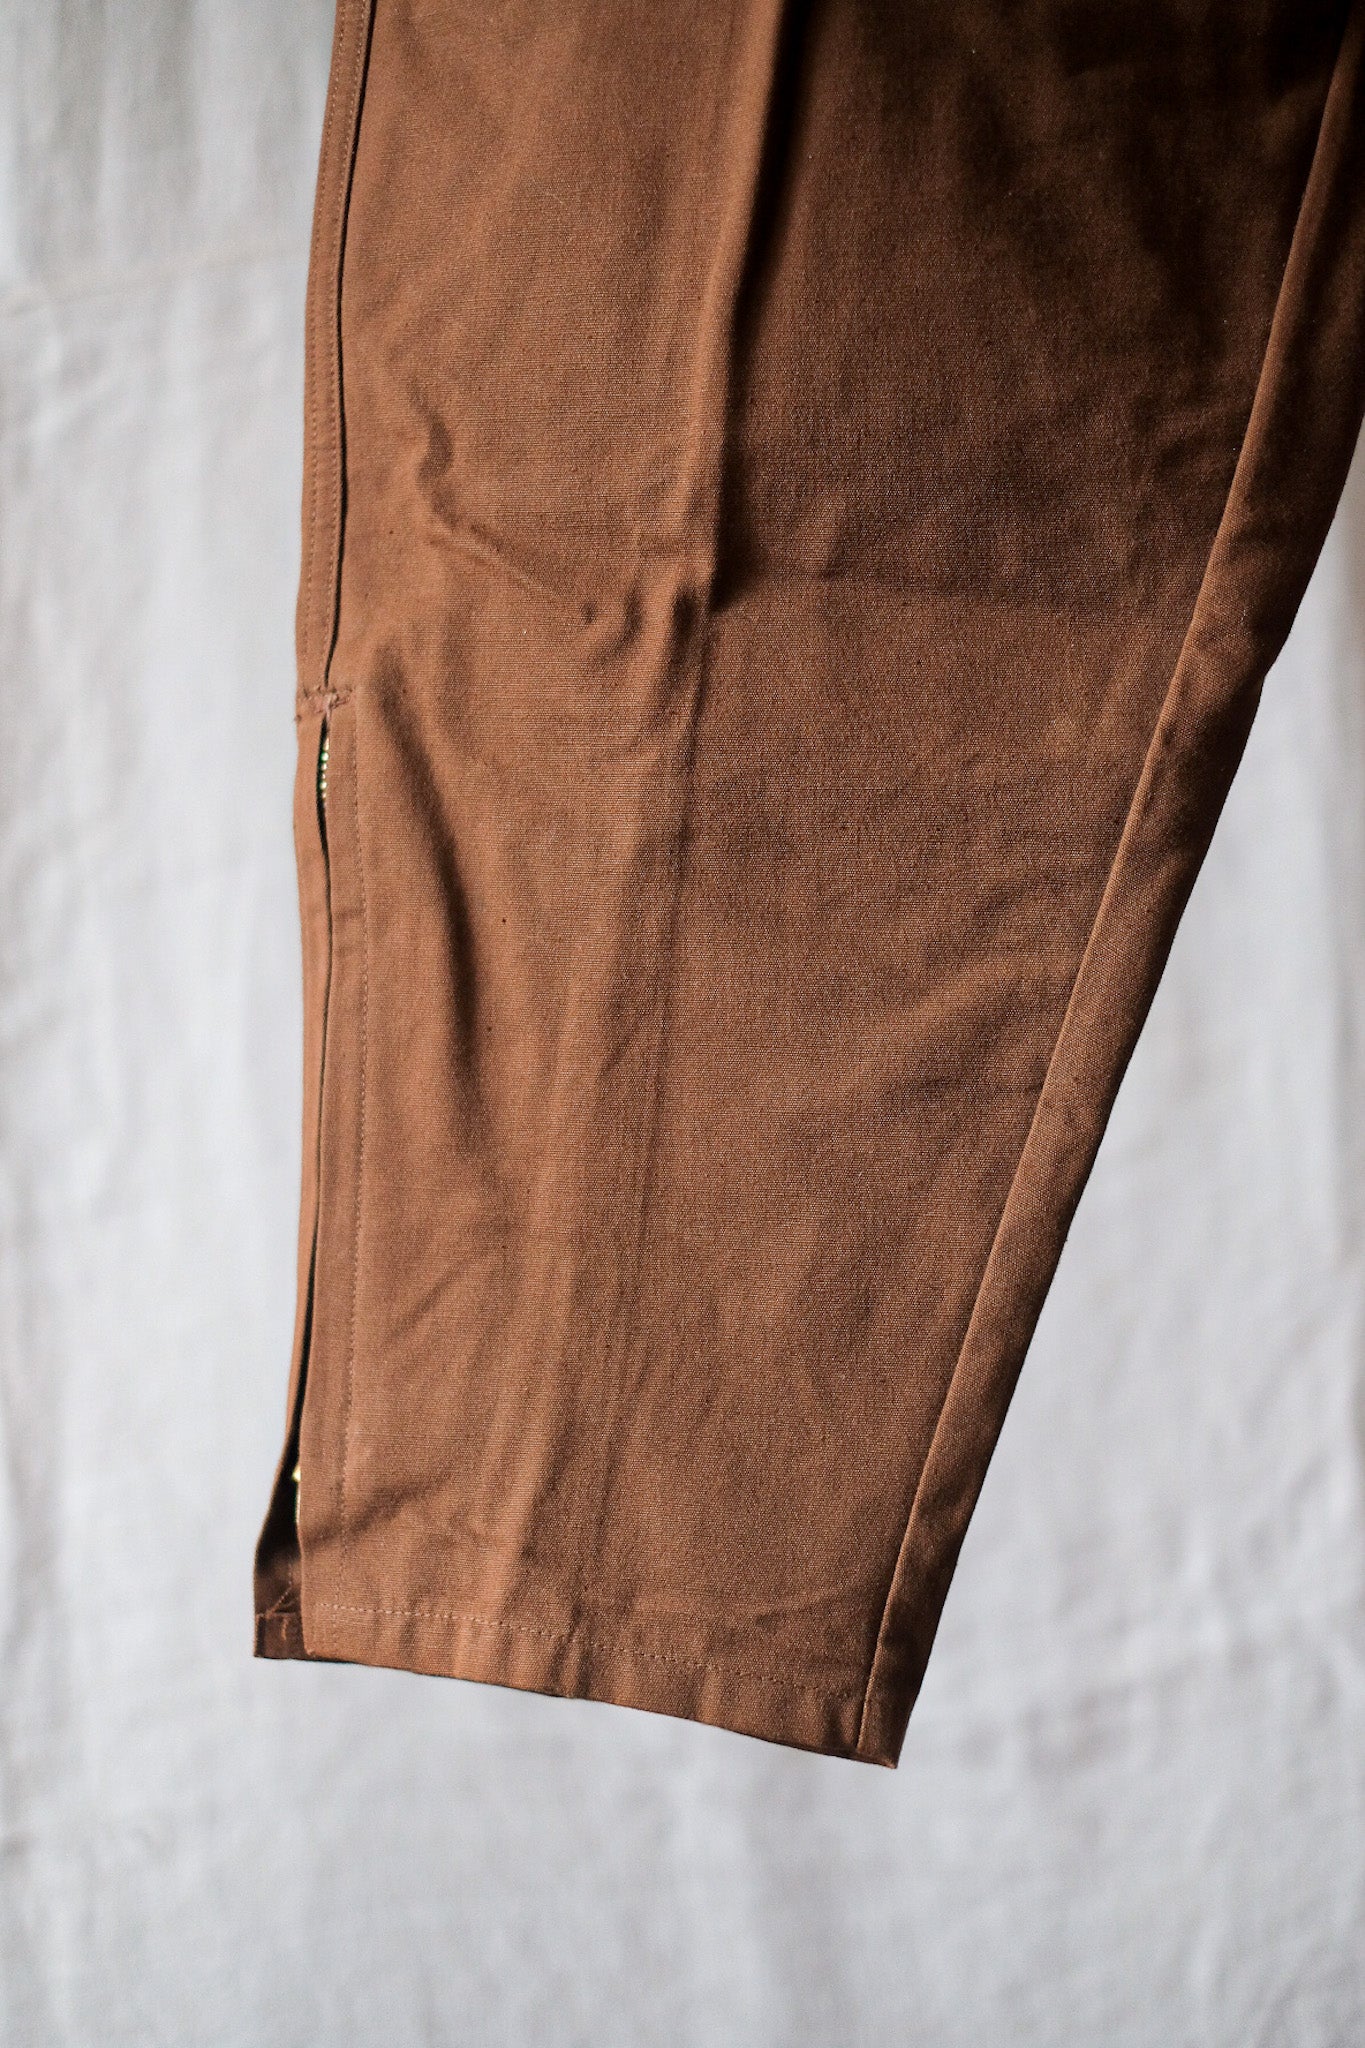 [~ 60's] French Vintage Brown Cotton Jodhpurs